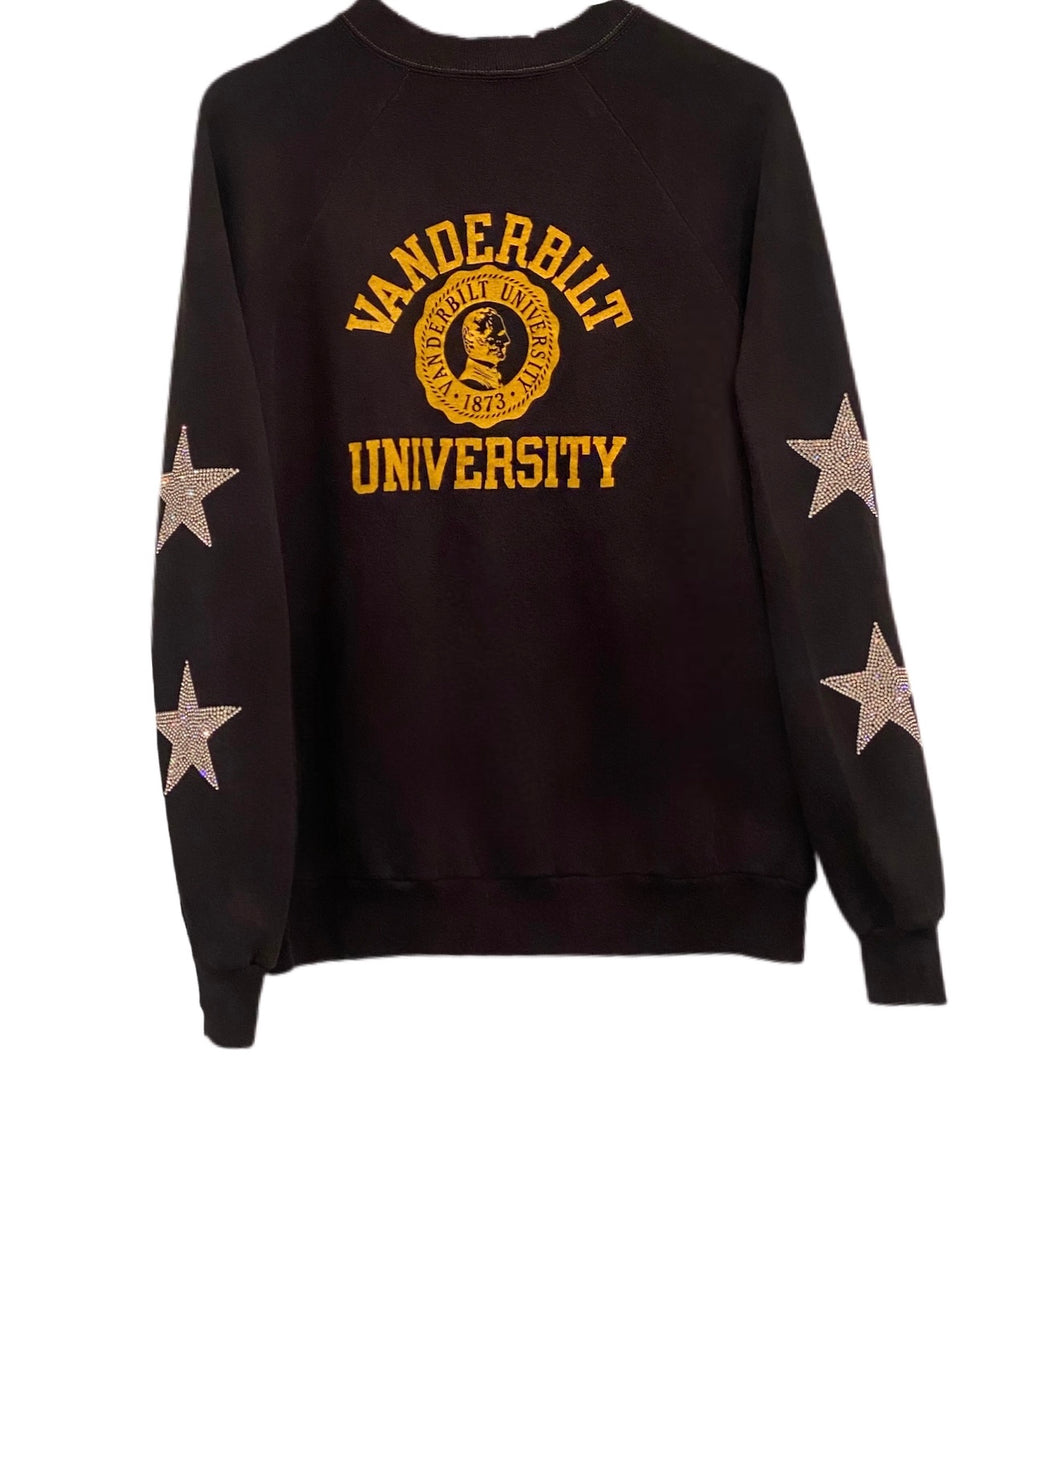 Vanderbilt University, One of a KIND “Rare Find” Vintage Sweatshirt with Crystal Star Design